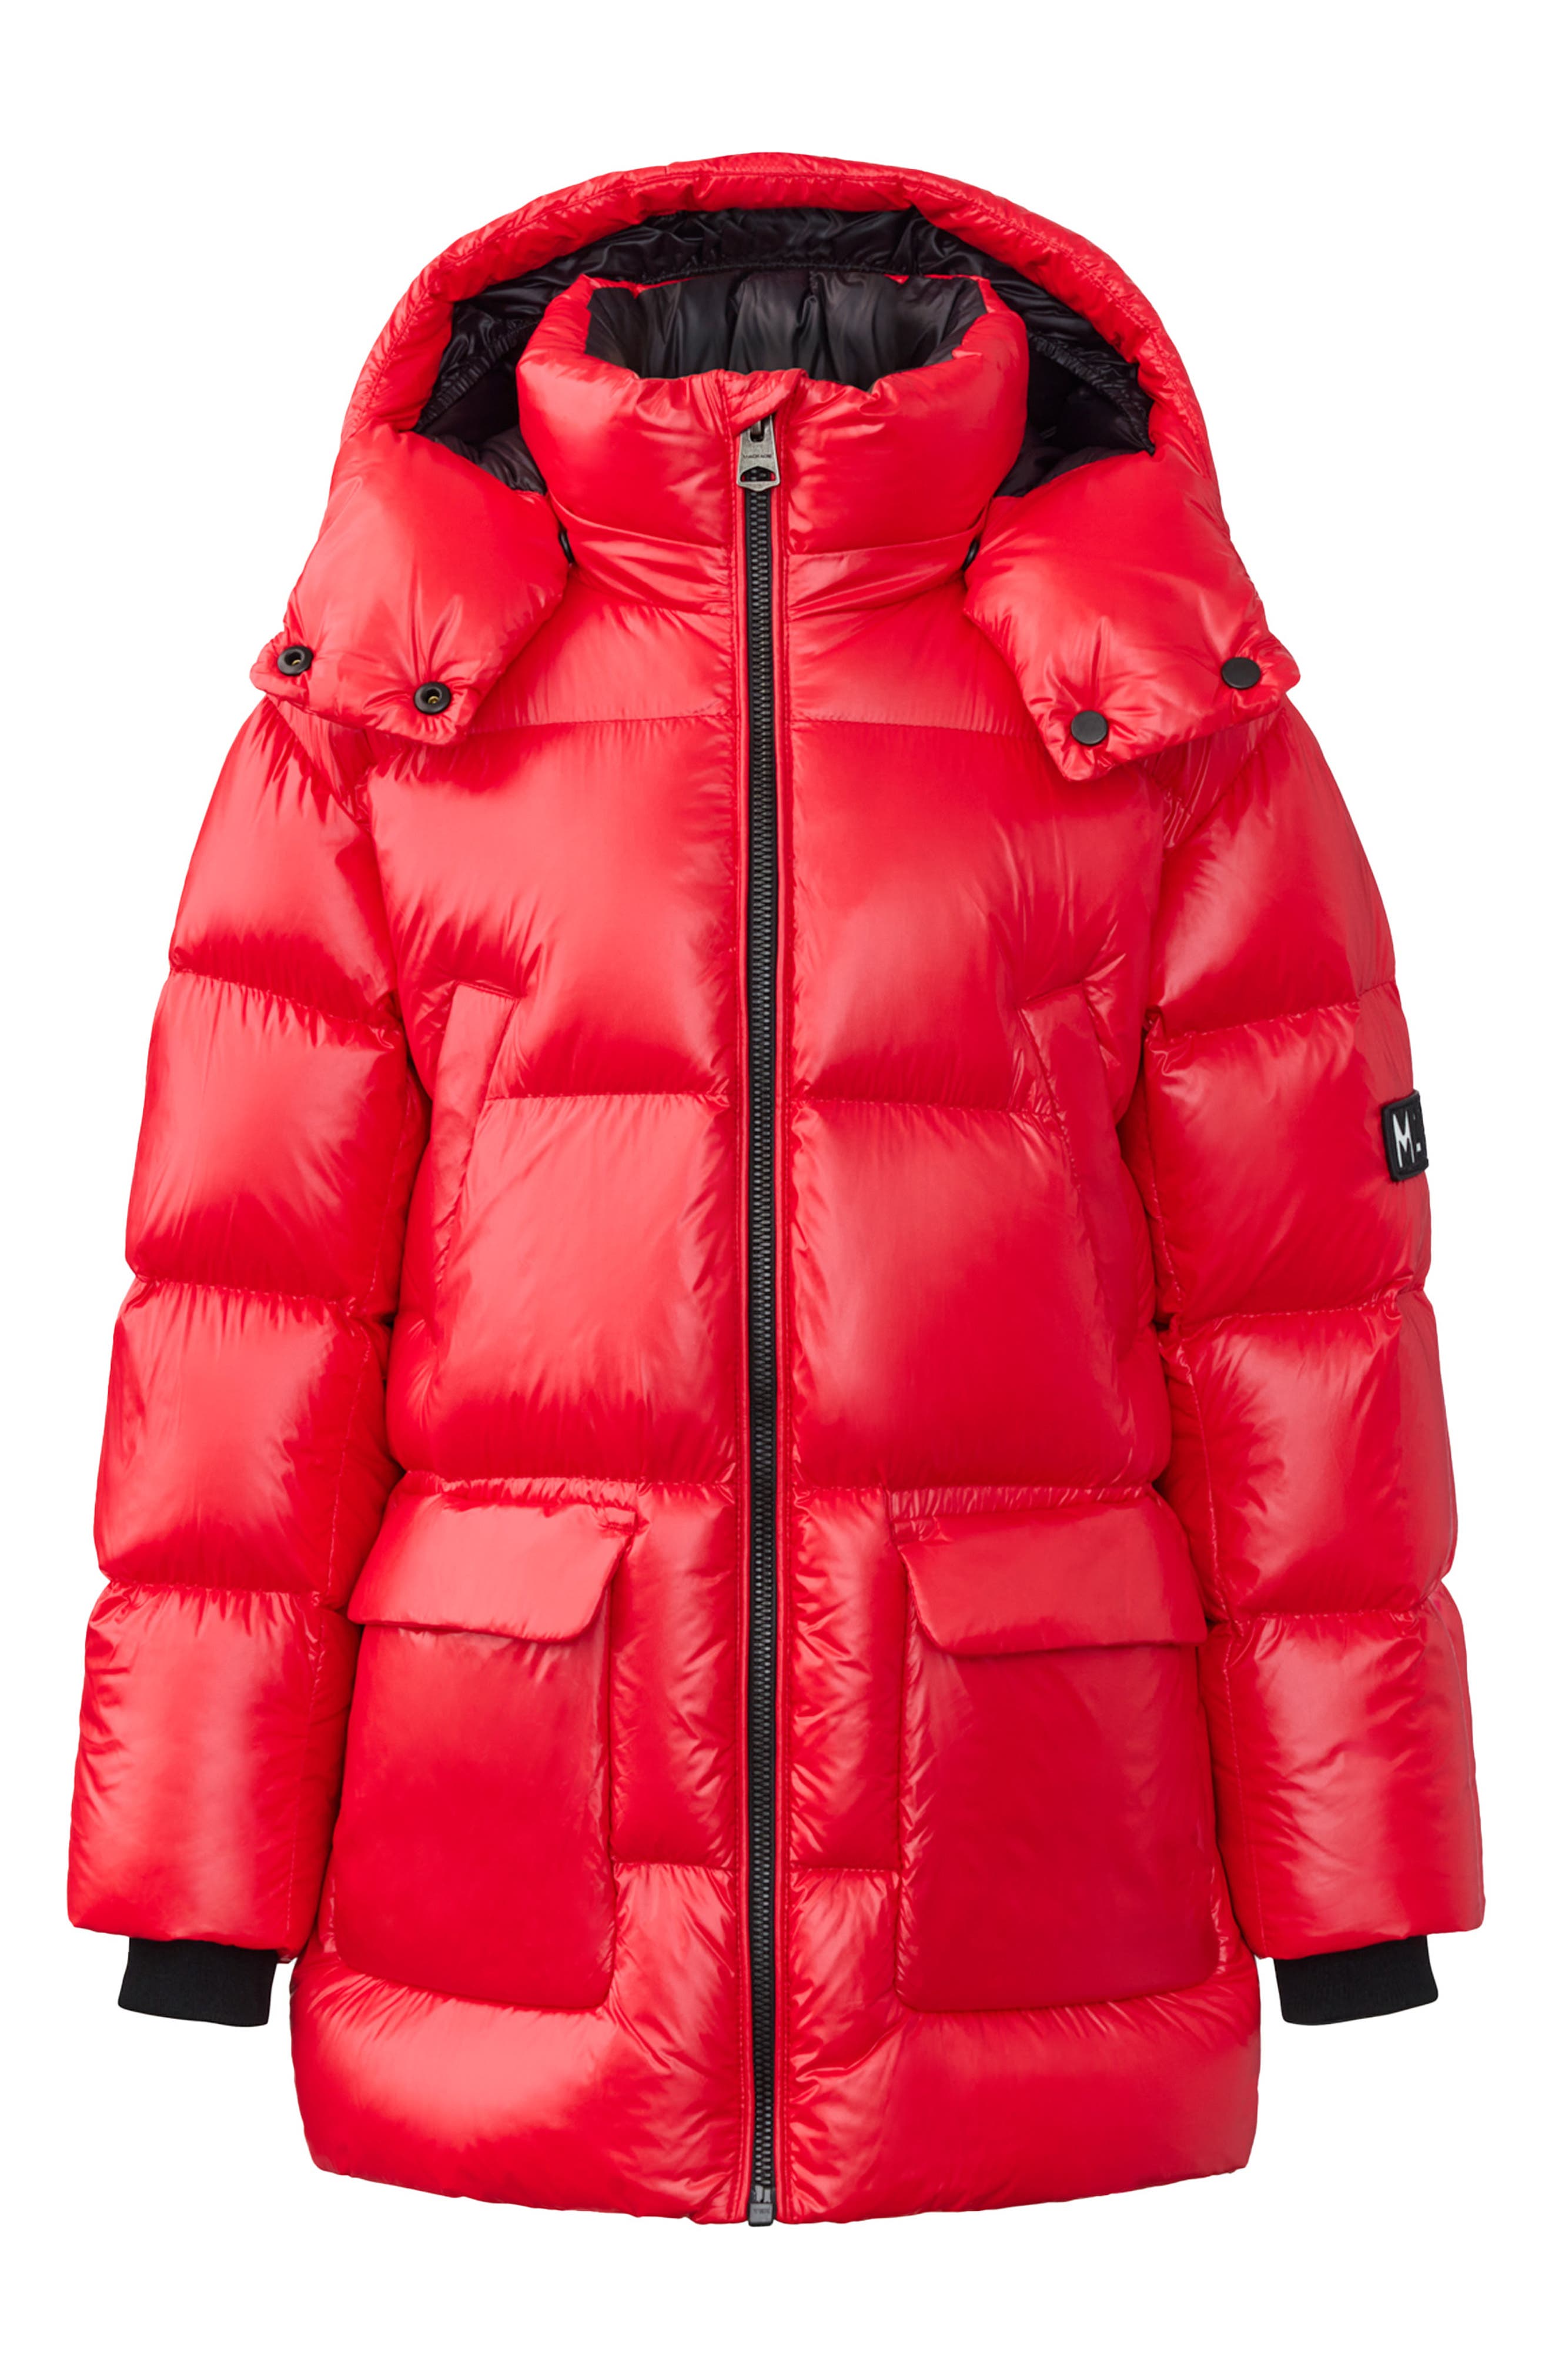 Gocco jacket discount 84% Red 9-12M KIDS FASHION Jackets Print 